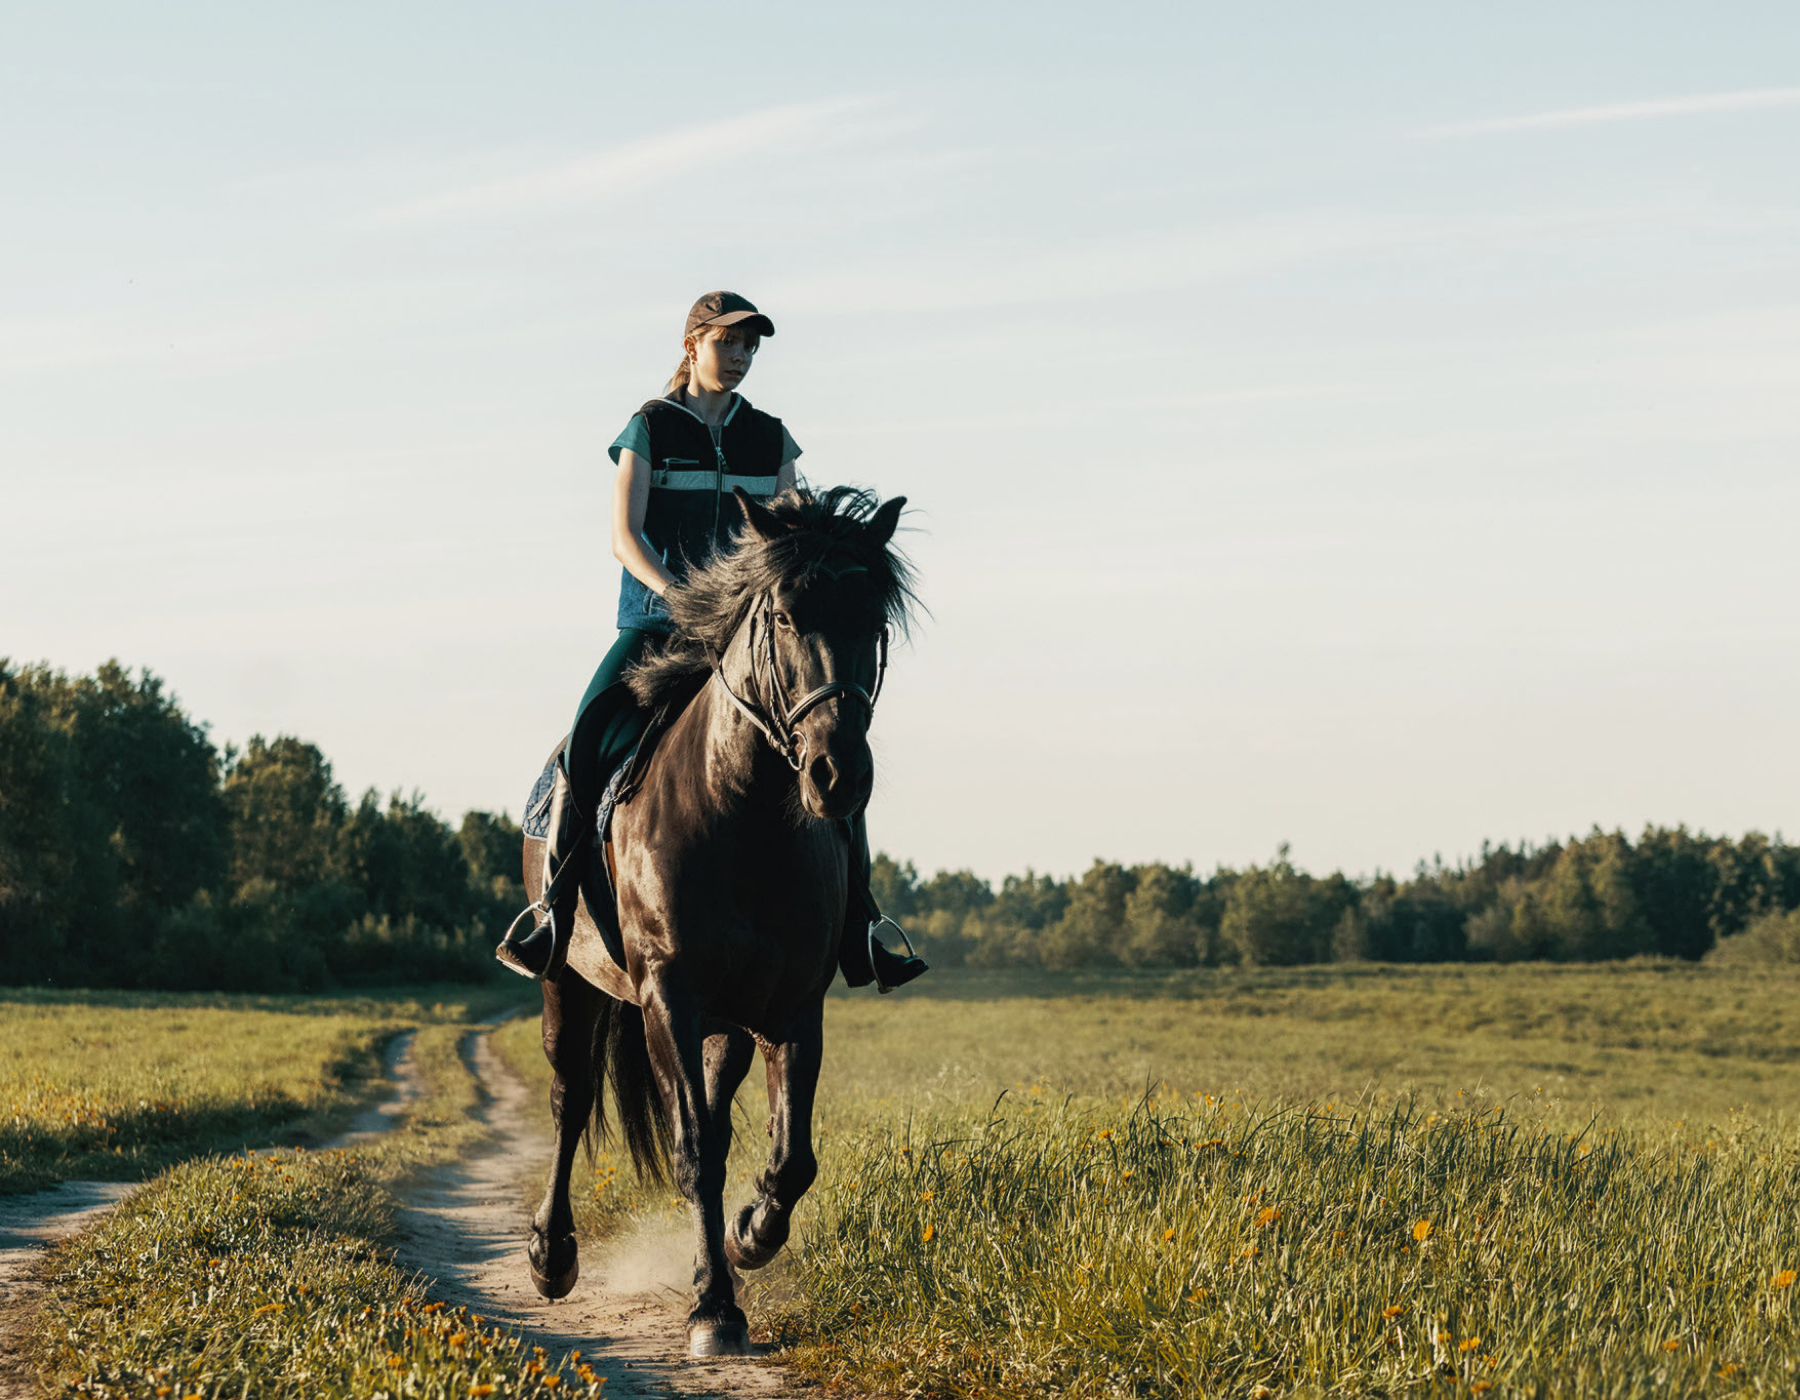 A teenage girl rides a free horse down a dirt path in a field.